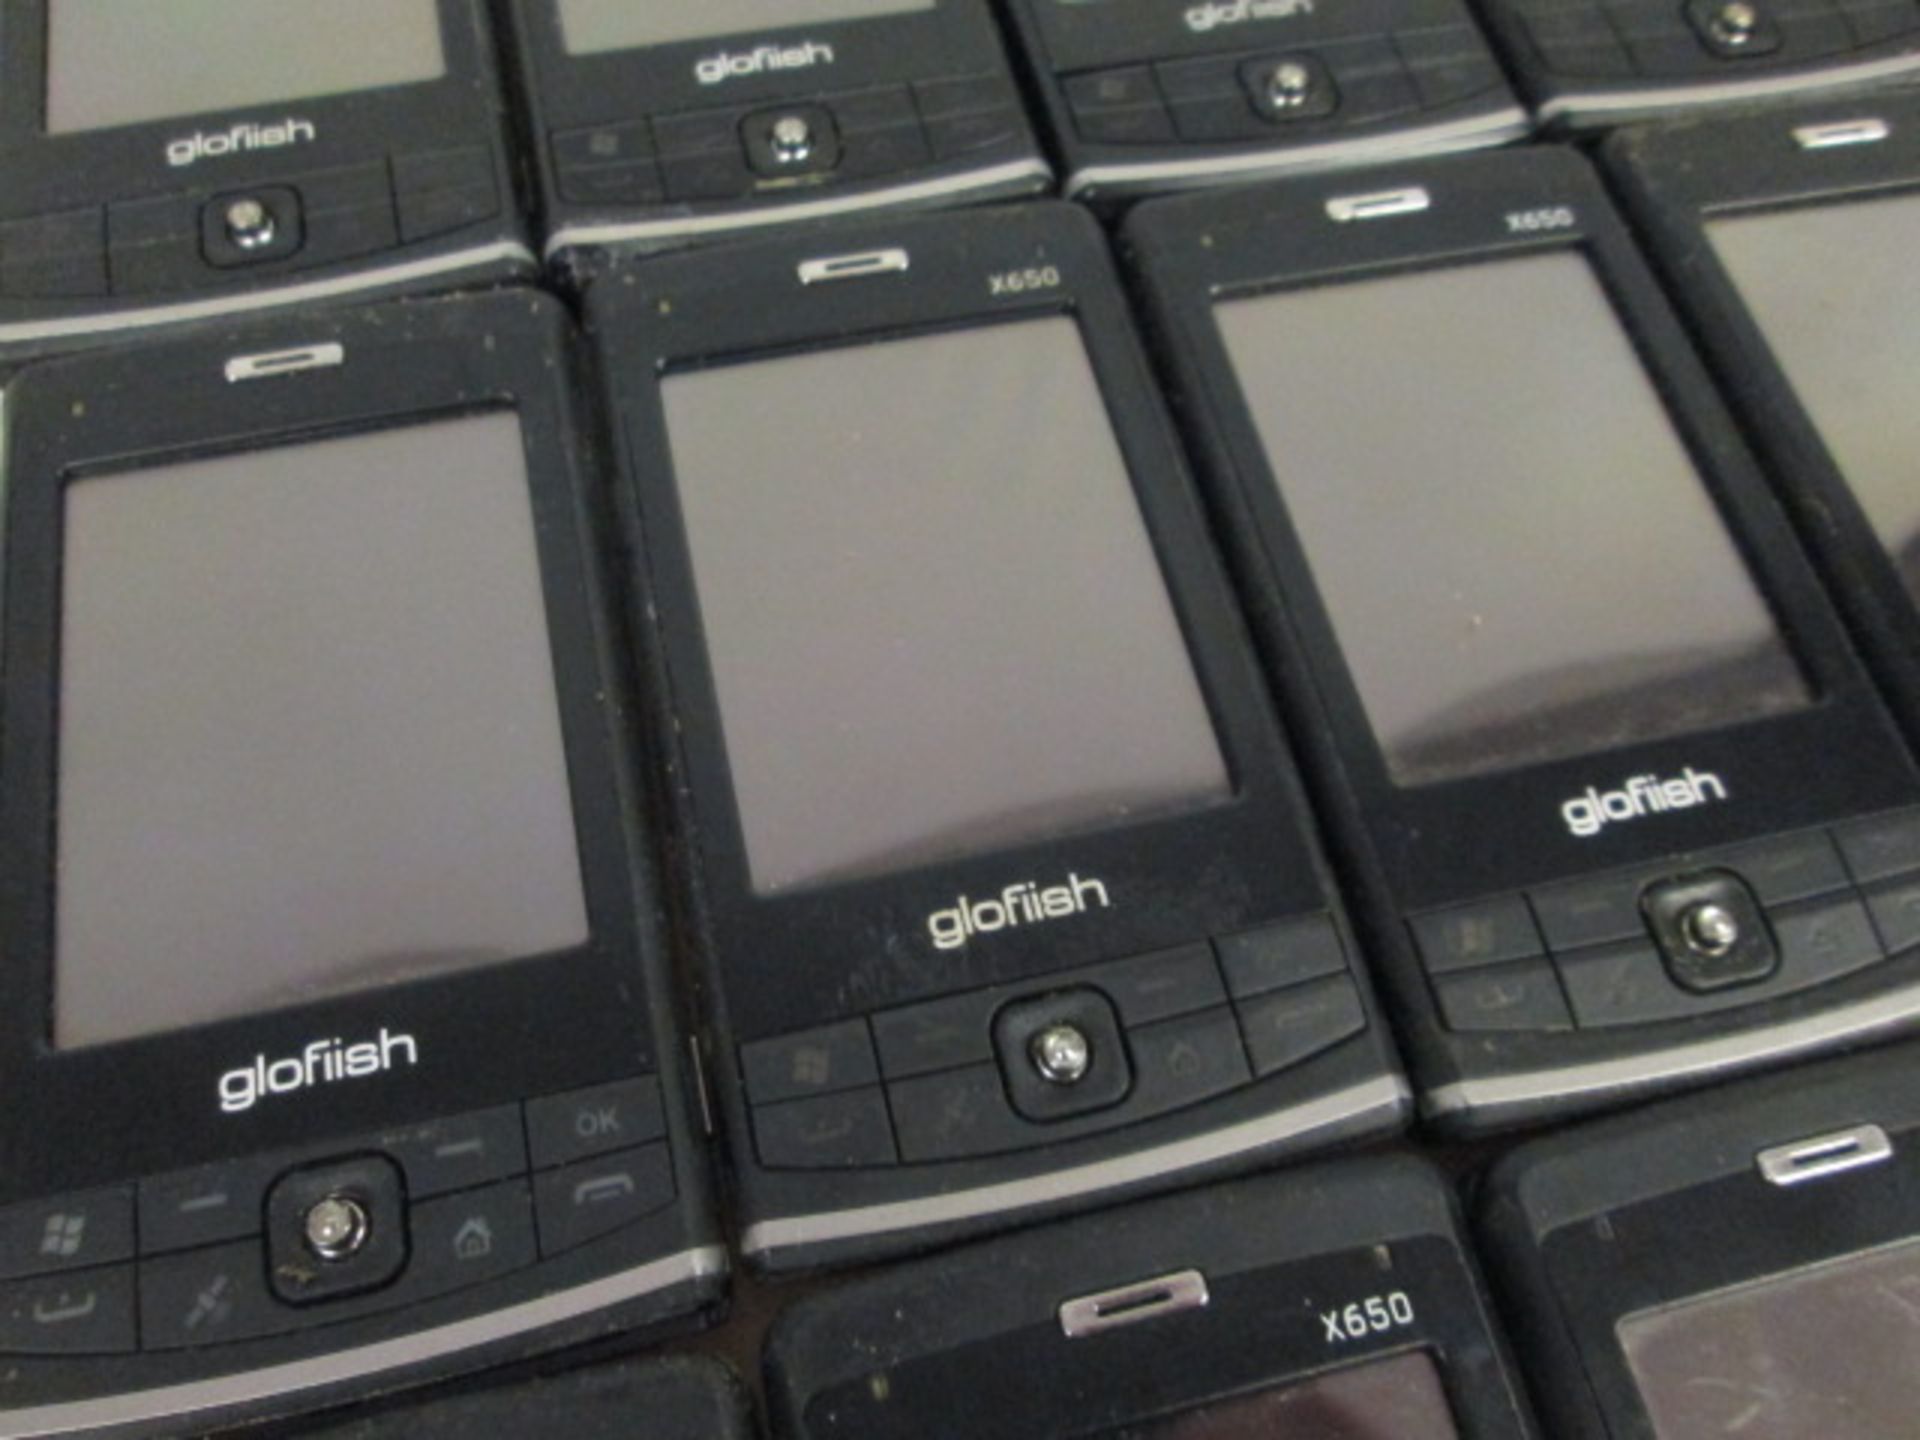 35 x Eten Glofiish X650 & X600 Windows Mobile Smart Phones. No Power Supplies or Chargers, Unable to - Image 2 of 3